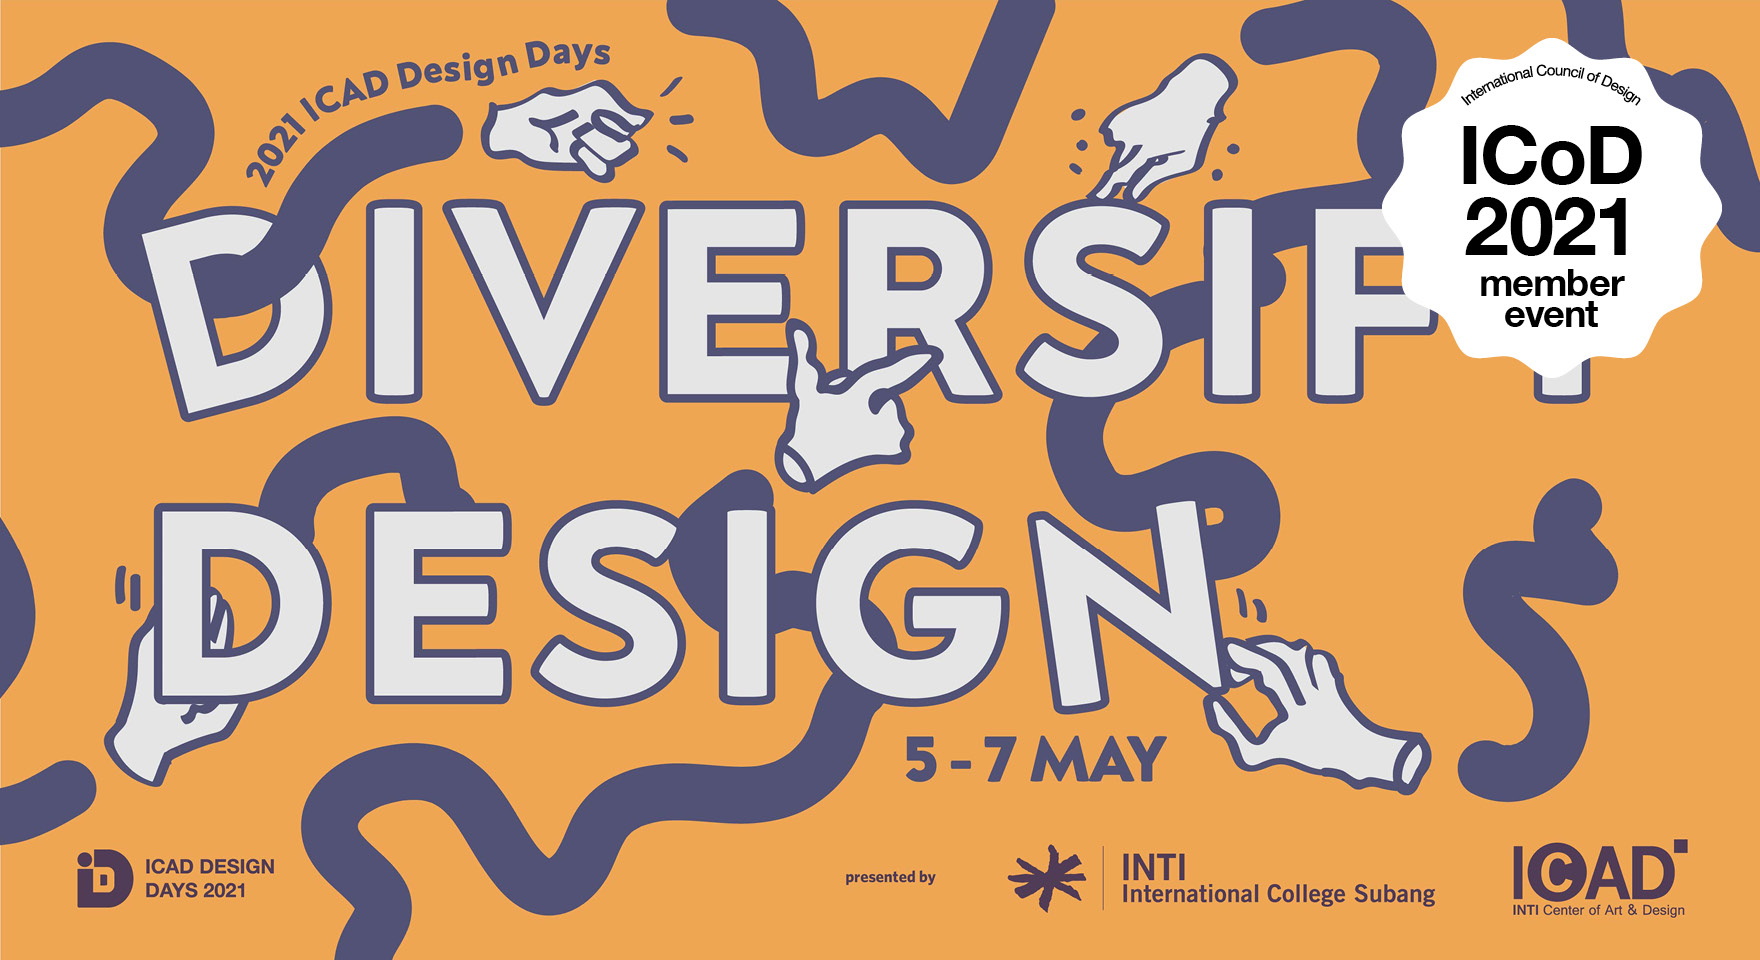 ICAD design days 2021: diversifying design